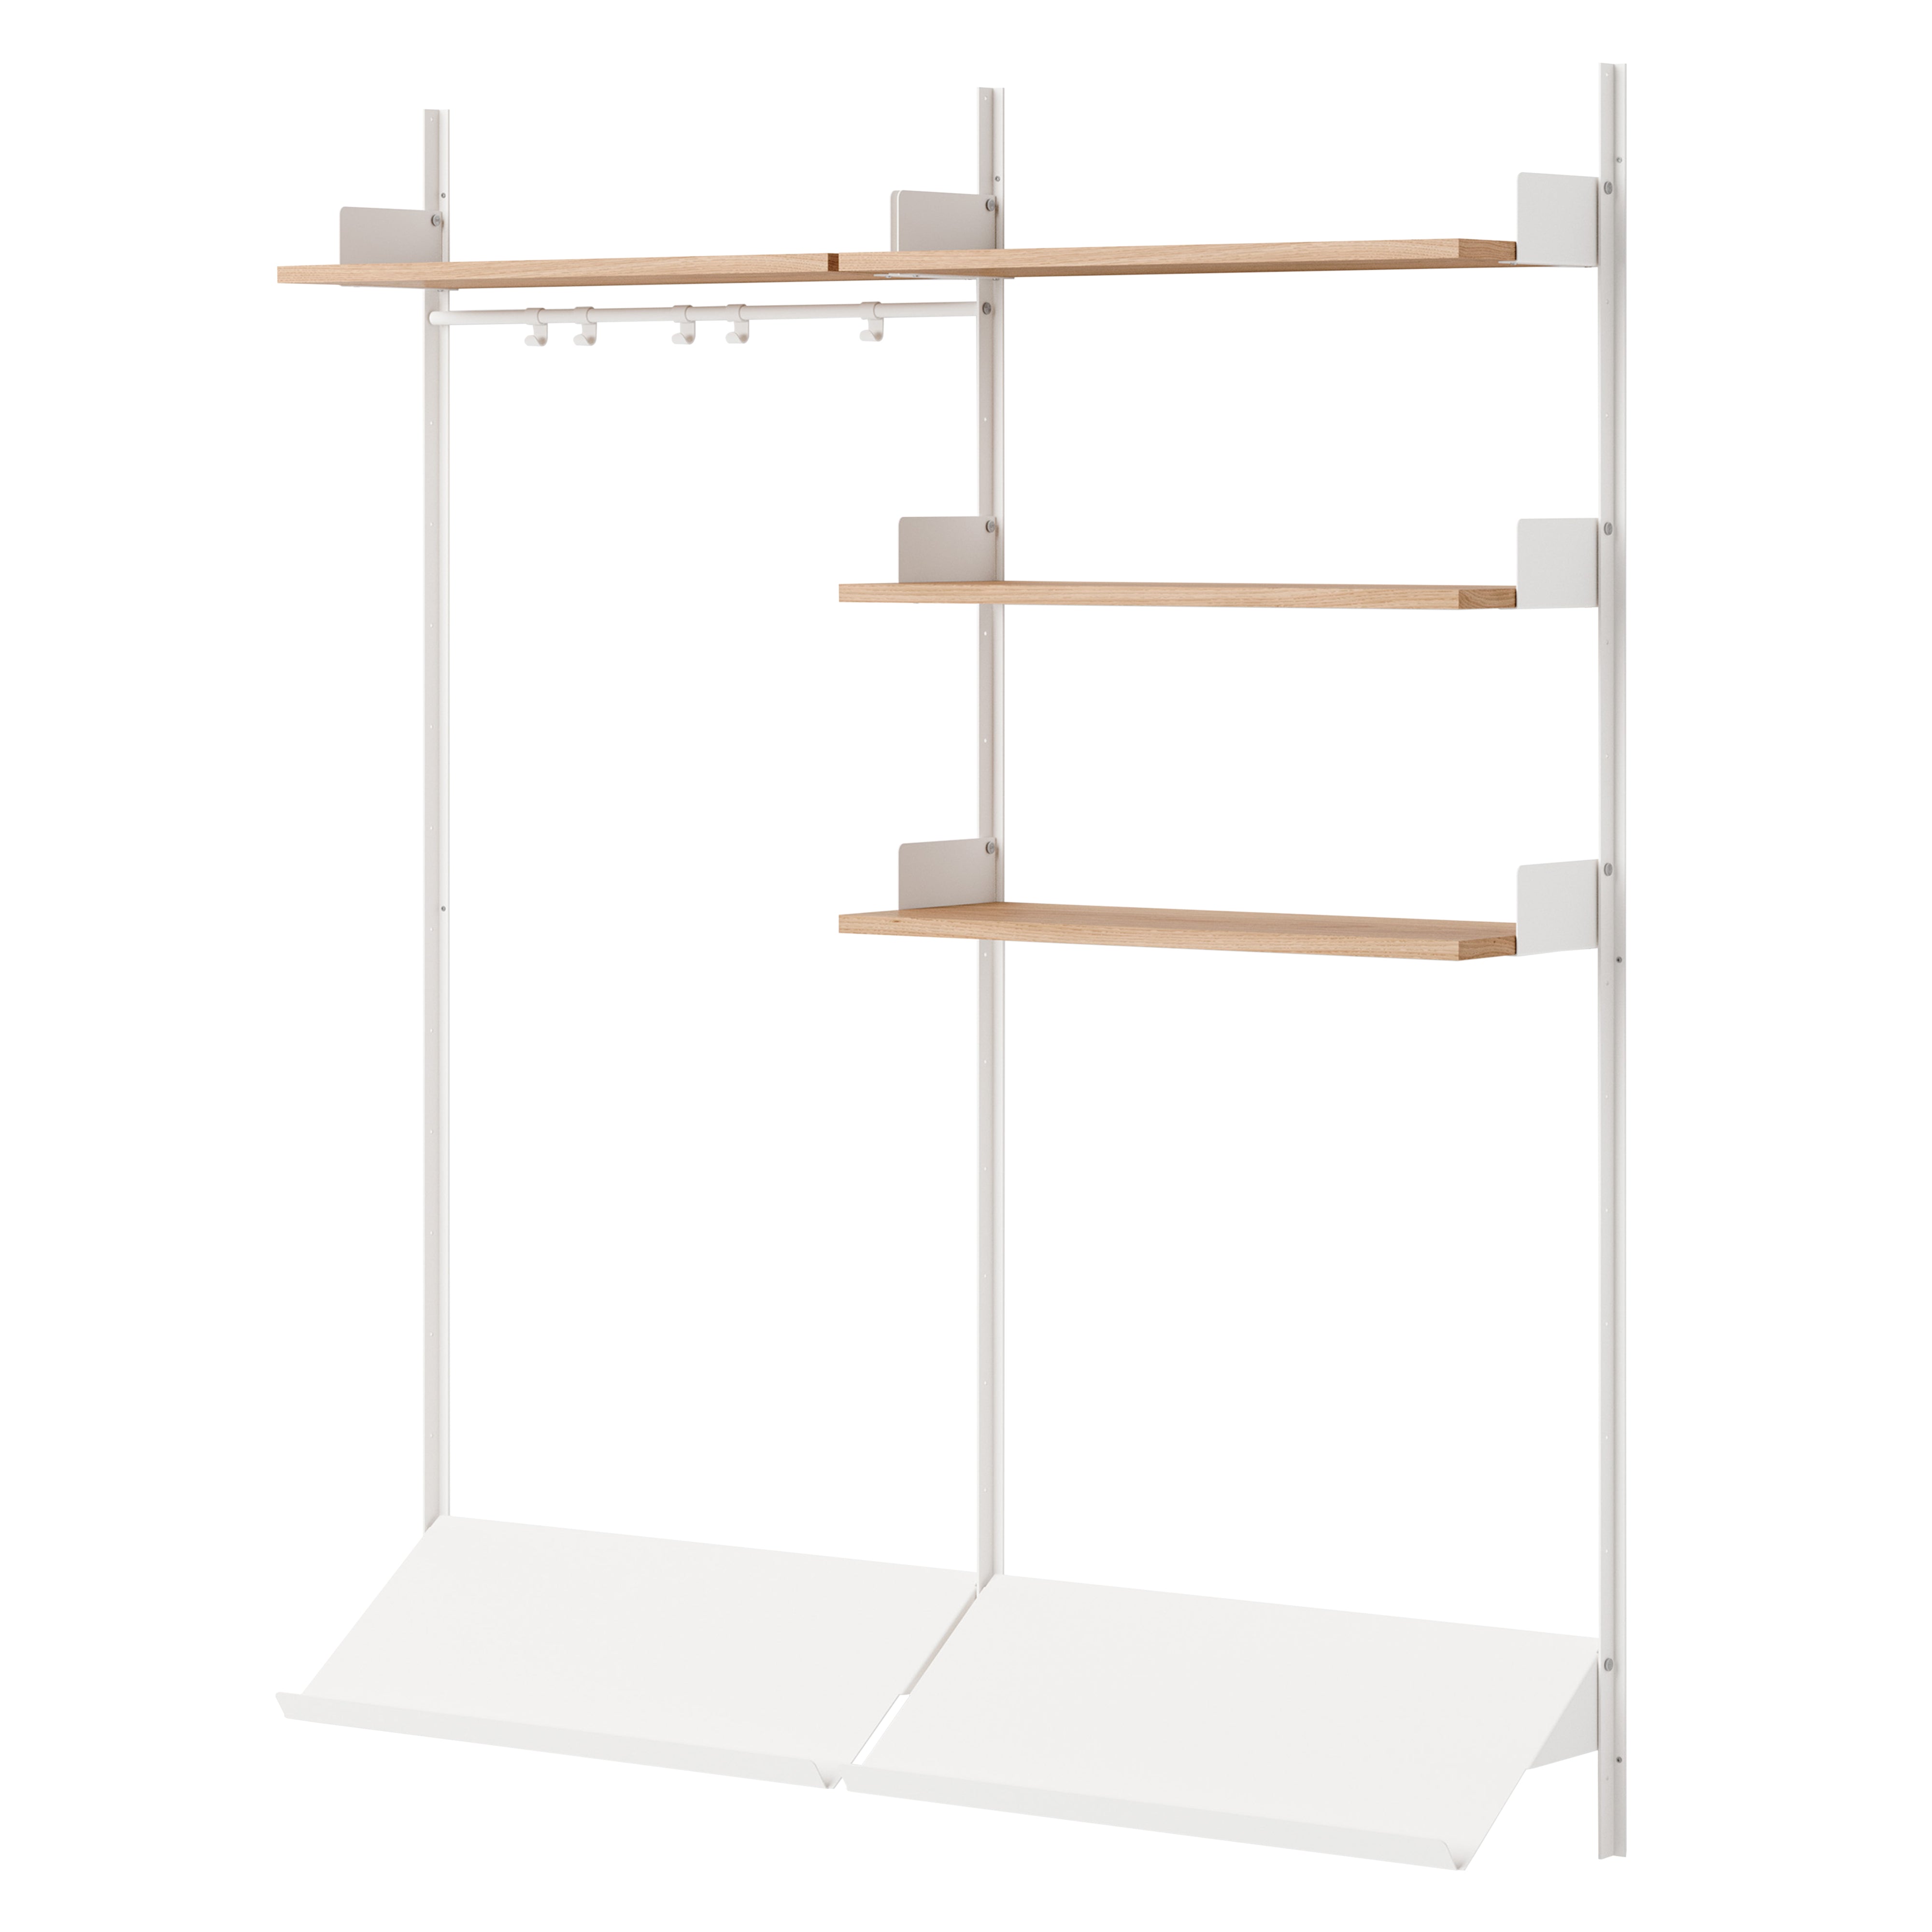 New Works Wardrobe Shelf: 3 + Oak + White